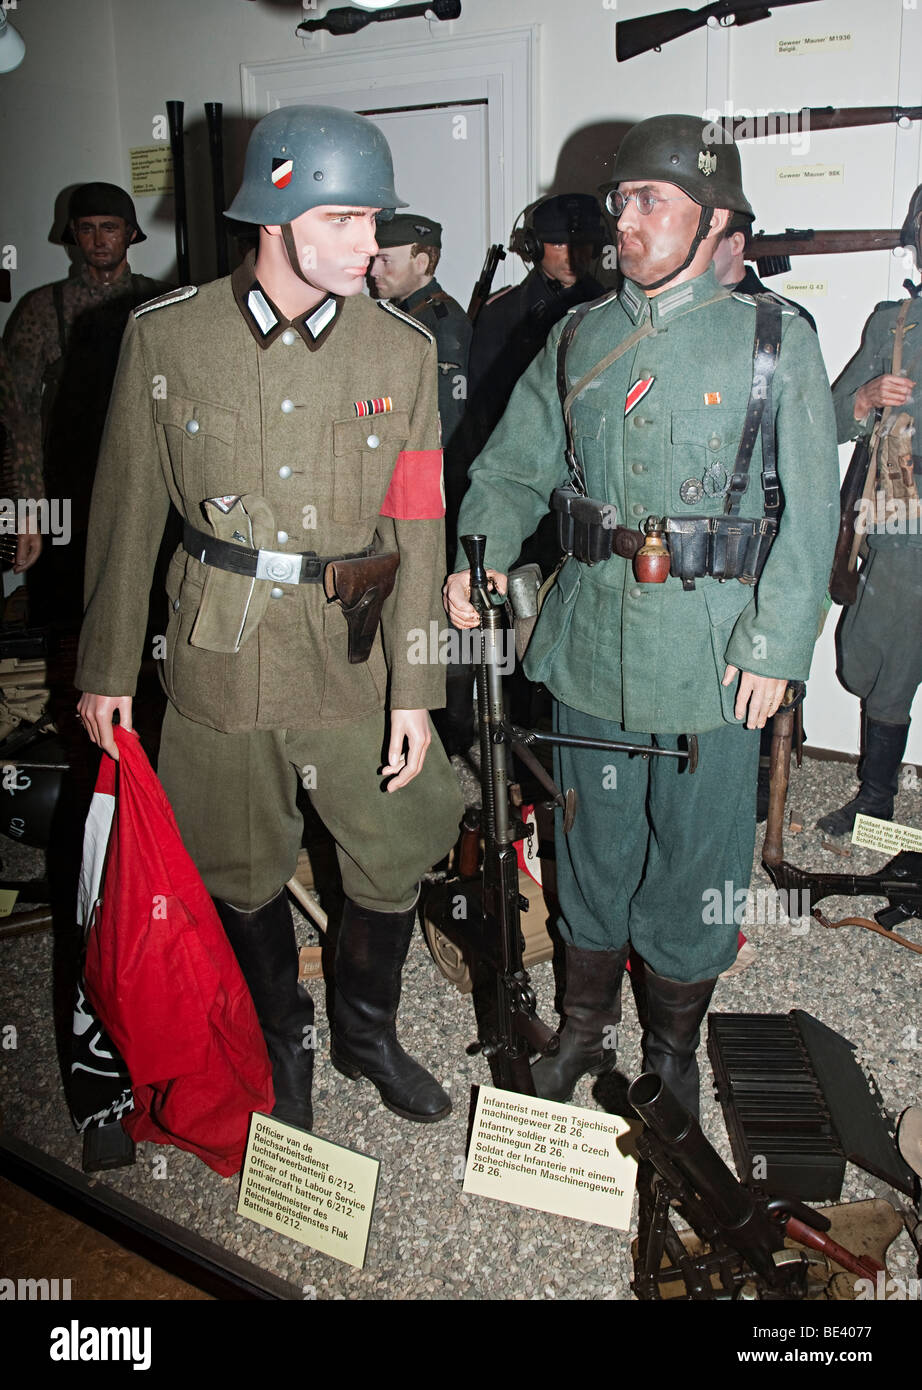 German Second World War soldiers in uniform in museum display Arnhem Netherlands Stock Photo